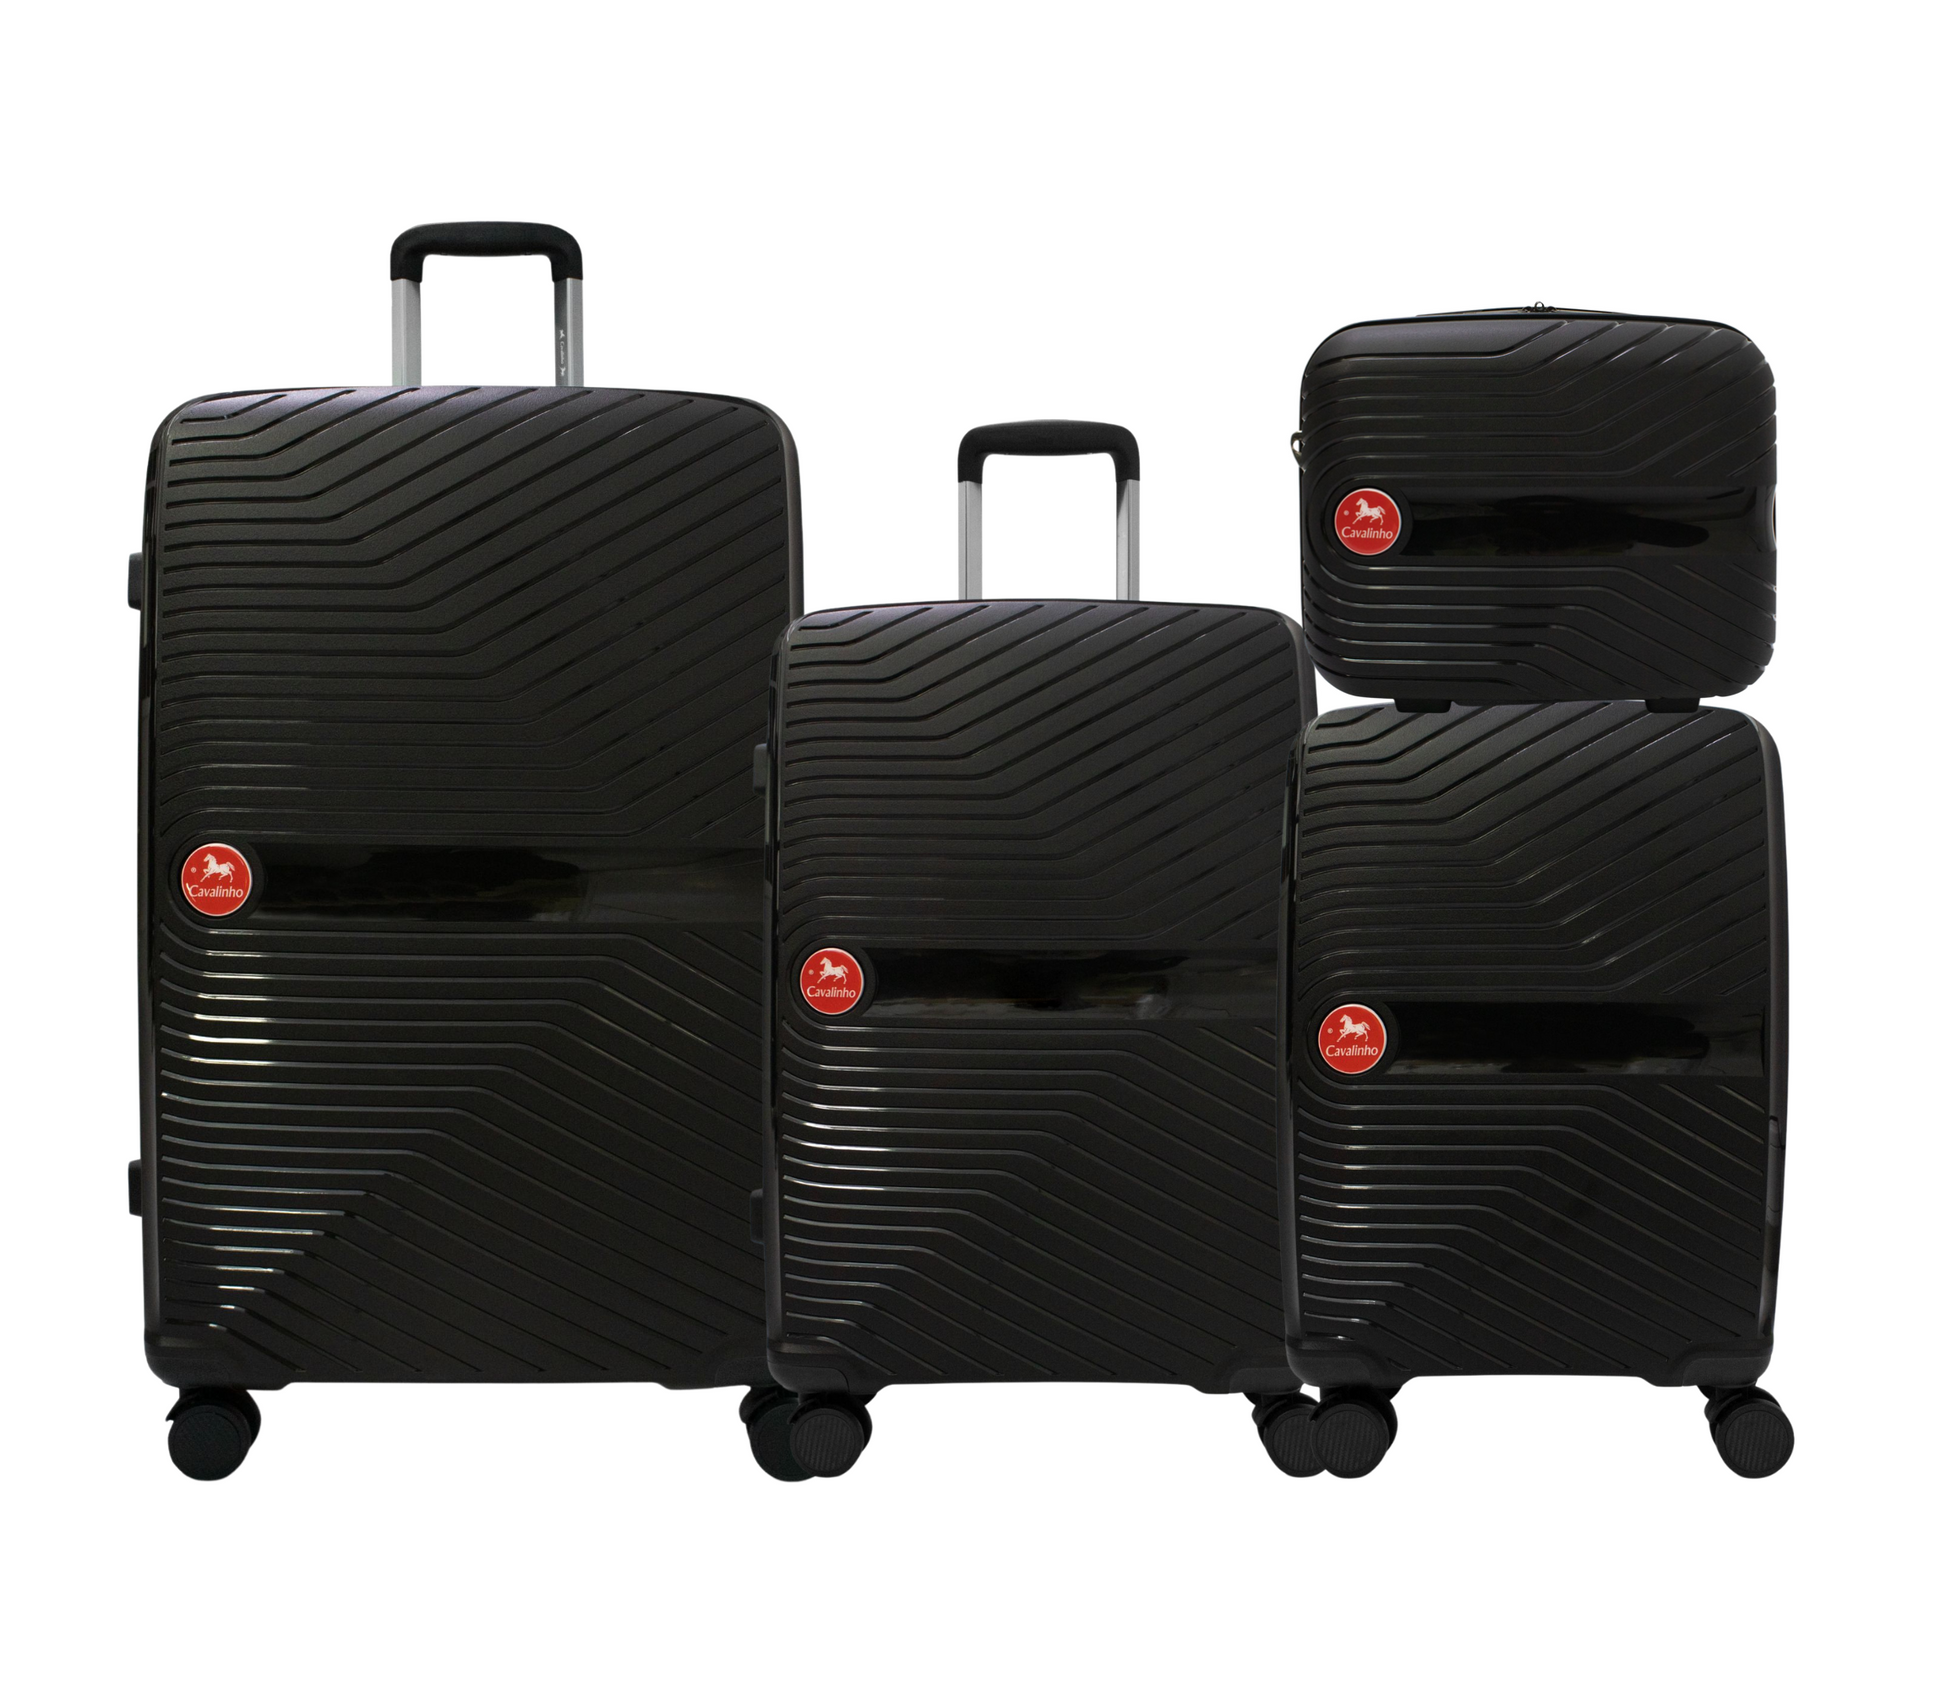 Cavalinho Canada & USA 4 Piece Set of Colorful Hardside Luggage (15", 19", 24", 28") - Black - 68020004.01.S4_1